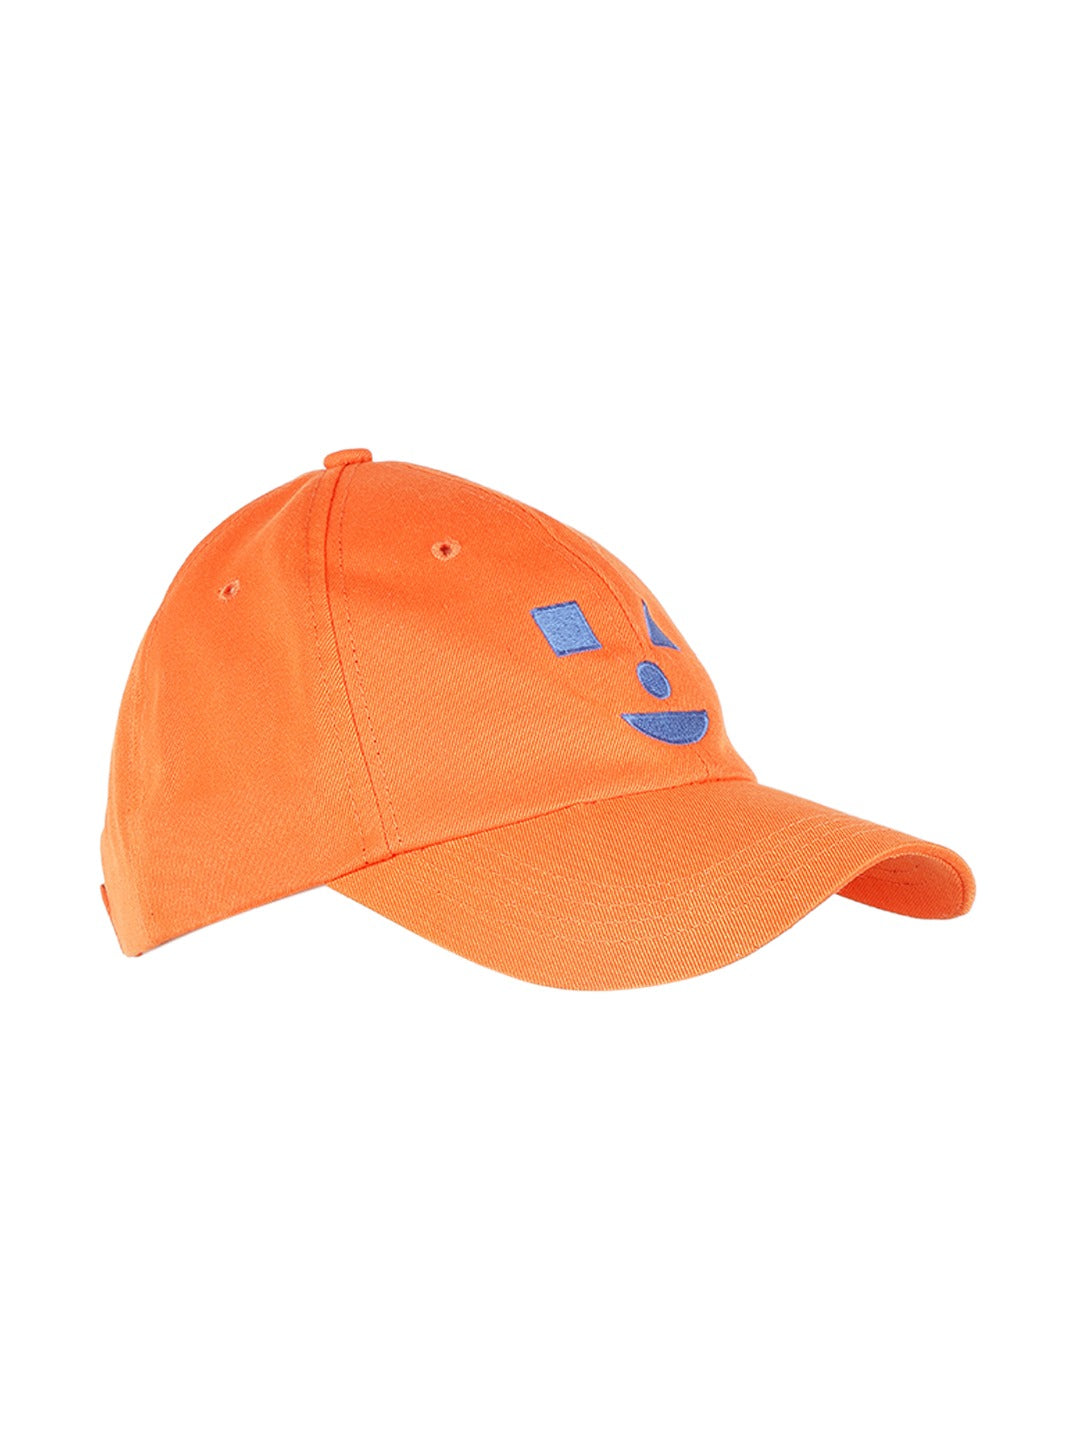 Blueberry orange embroidery baseball cap